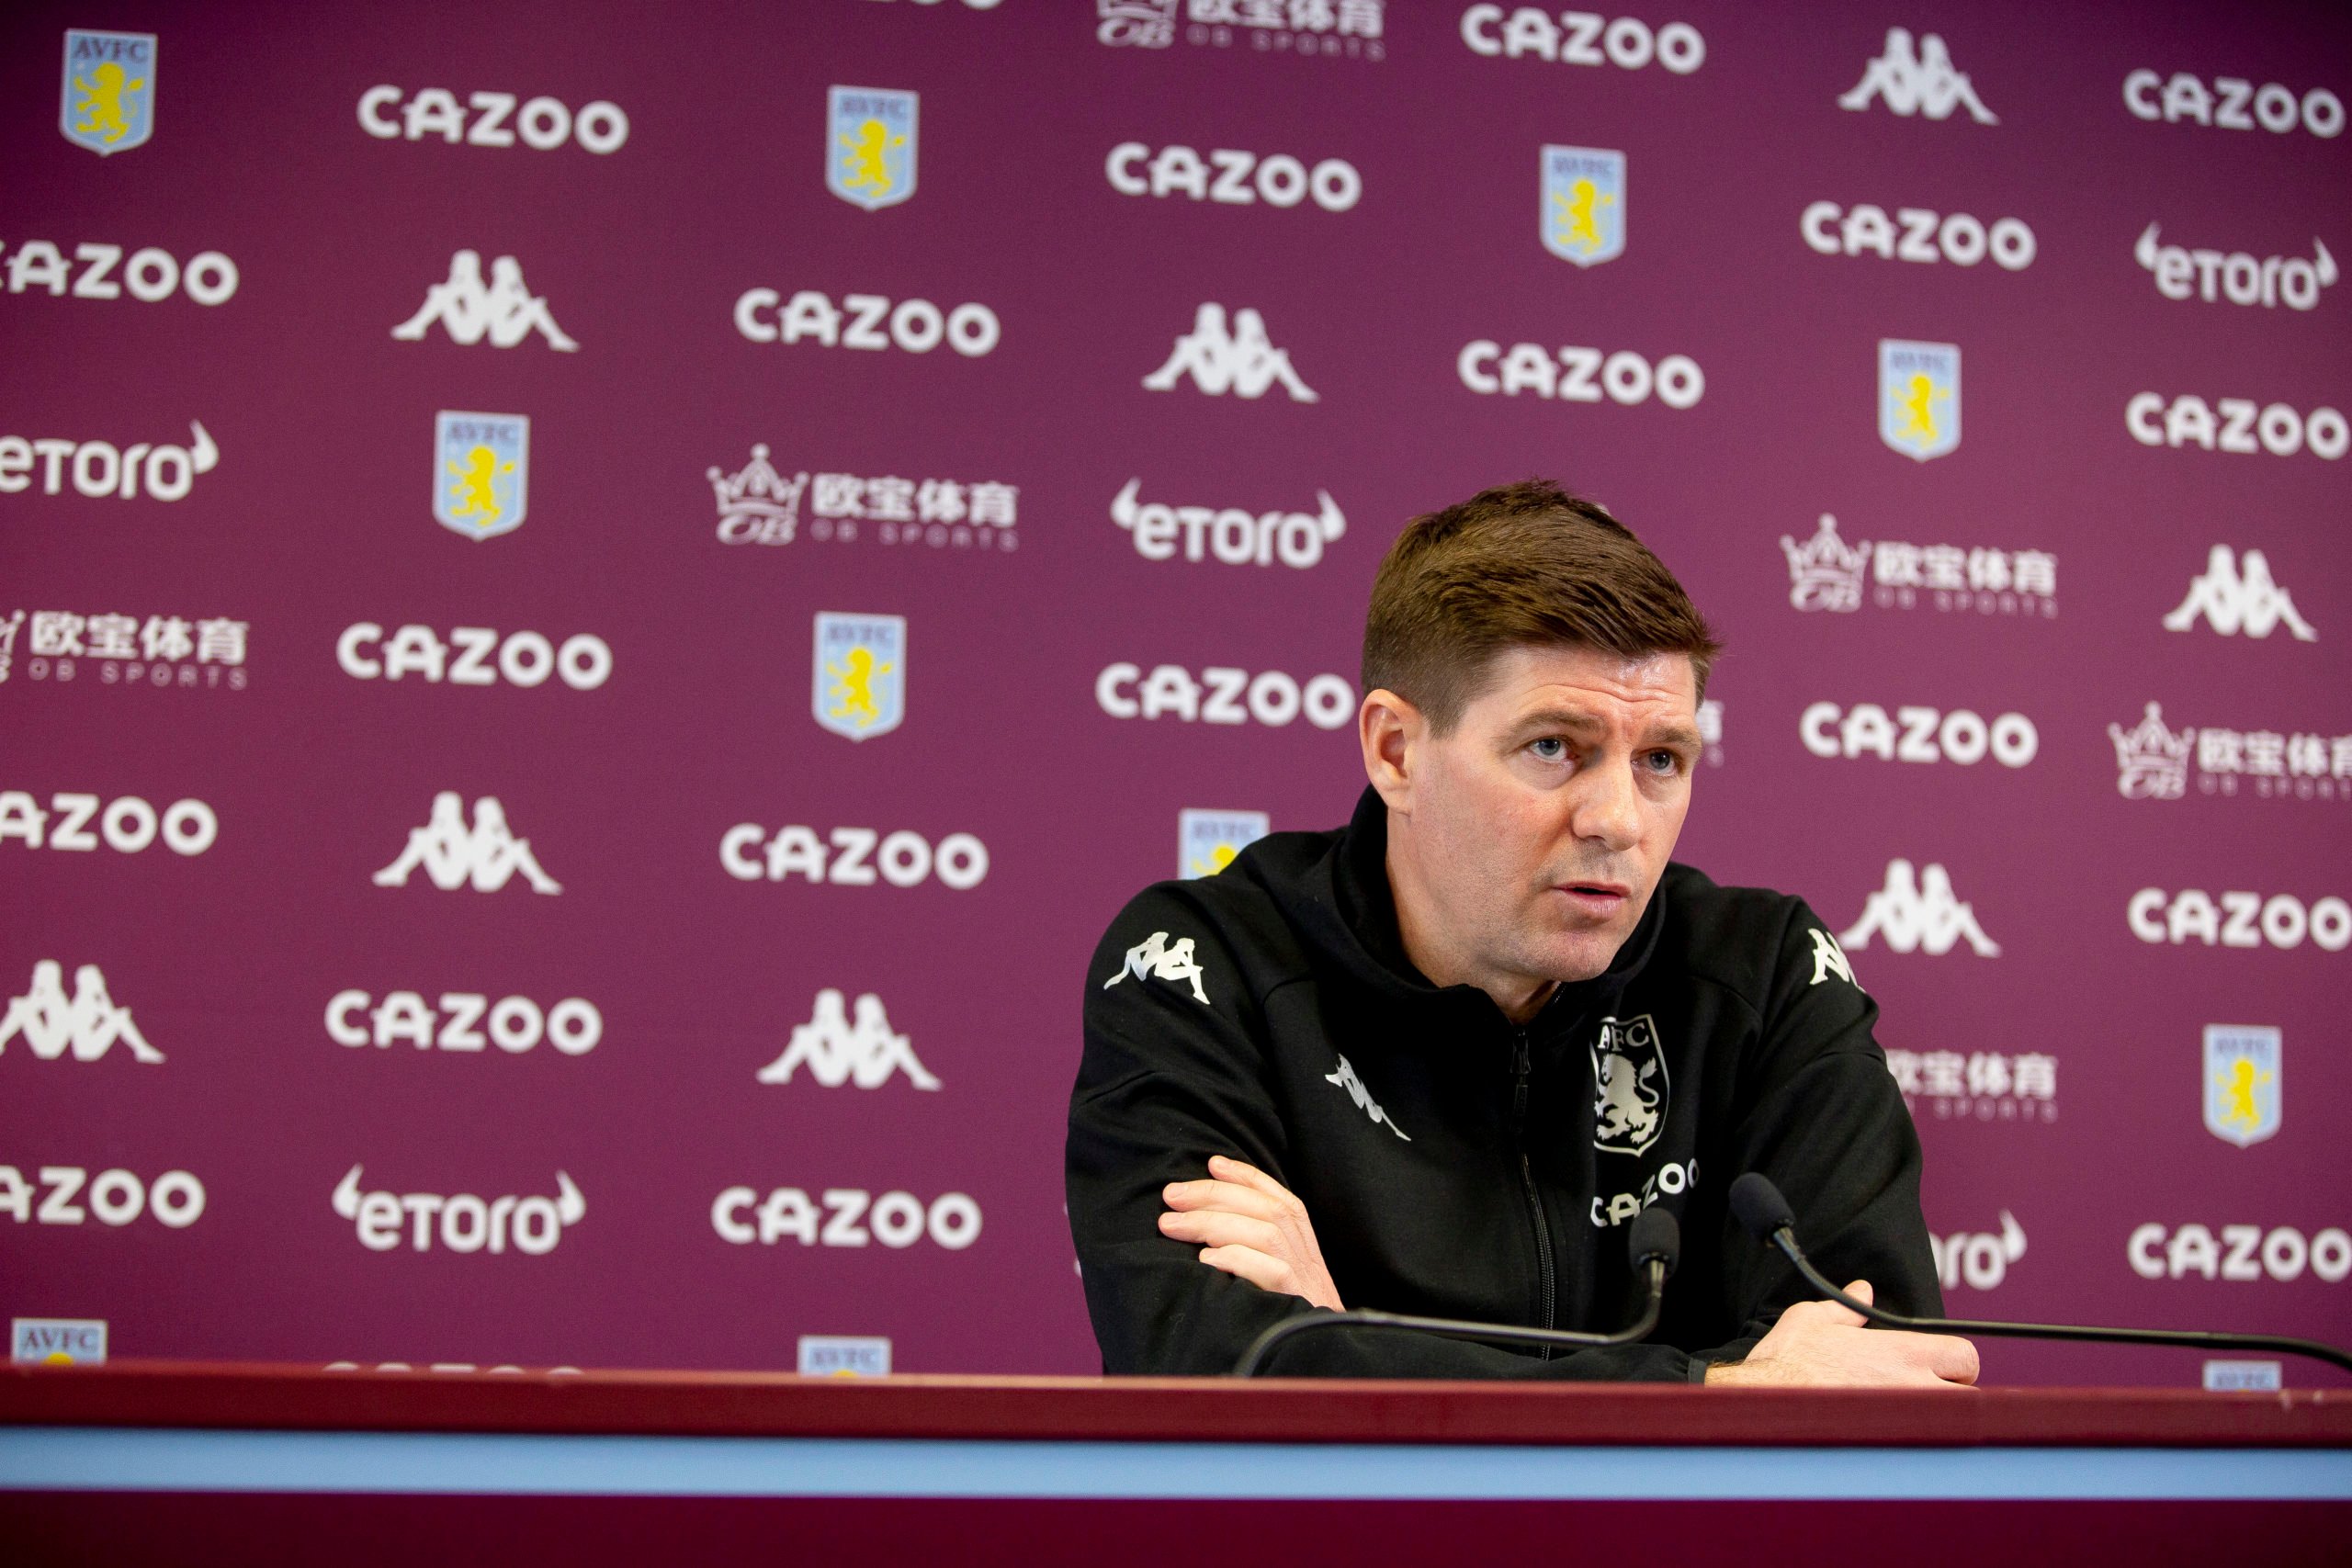 Aston Villa boss Steven Gerrard shares what he's heard about David Moyes and his coaching staff